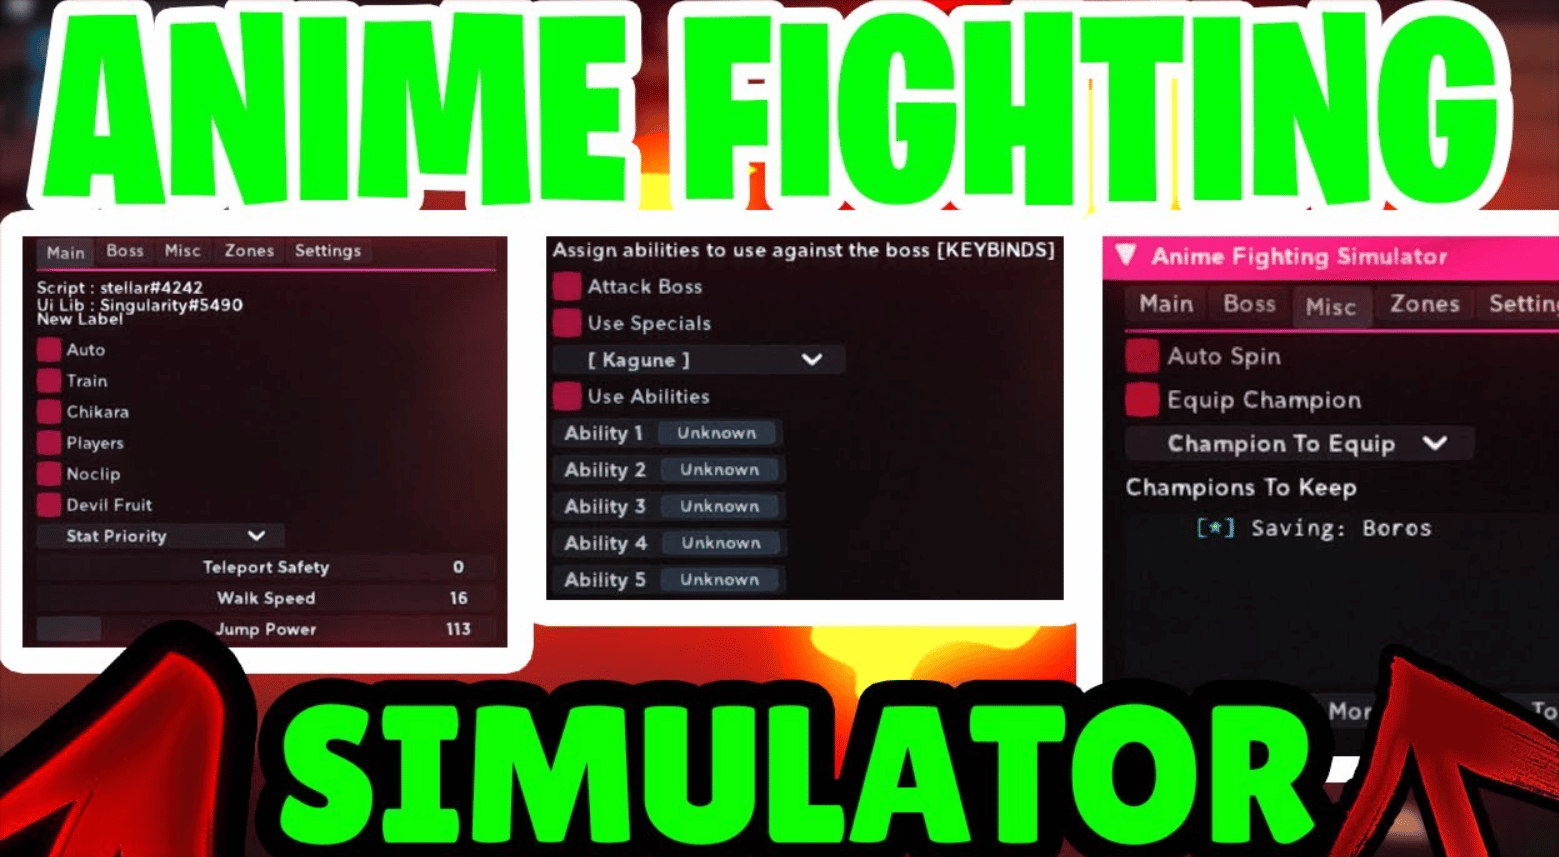 Anime Fighting Simulator Script/Hack, UPDATED